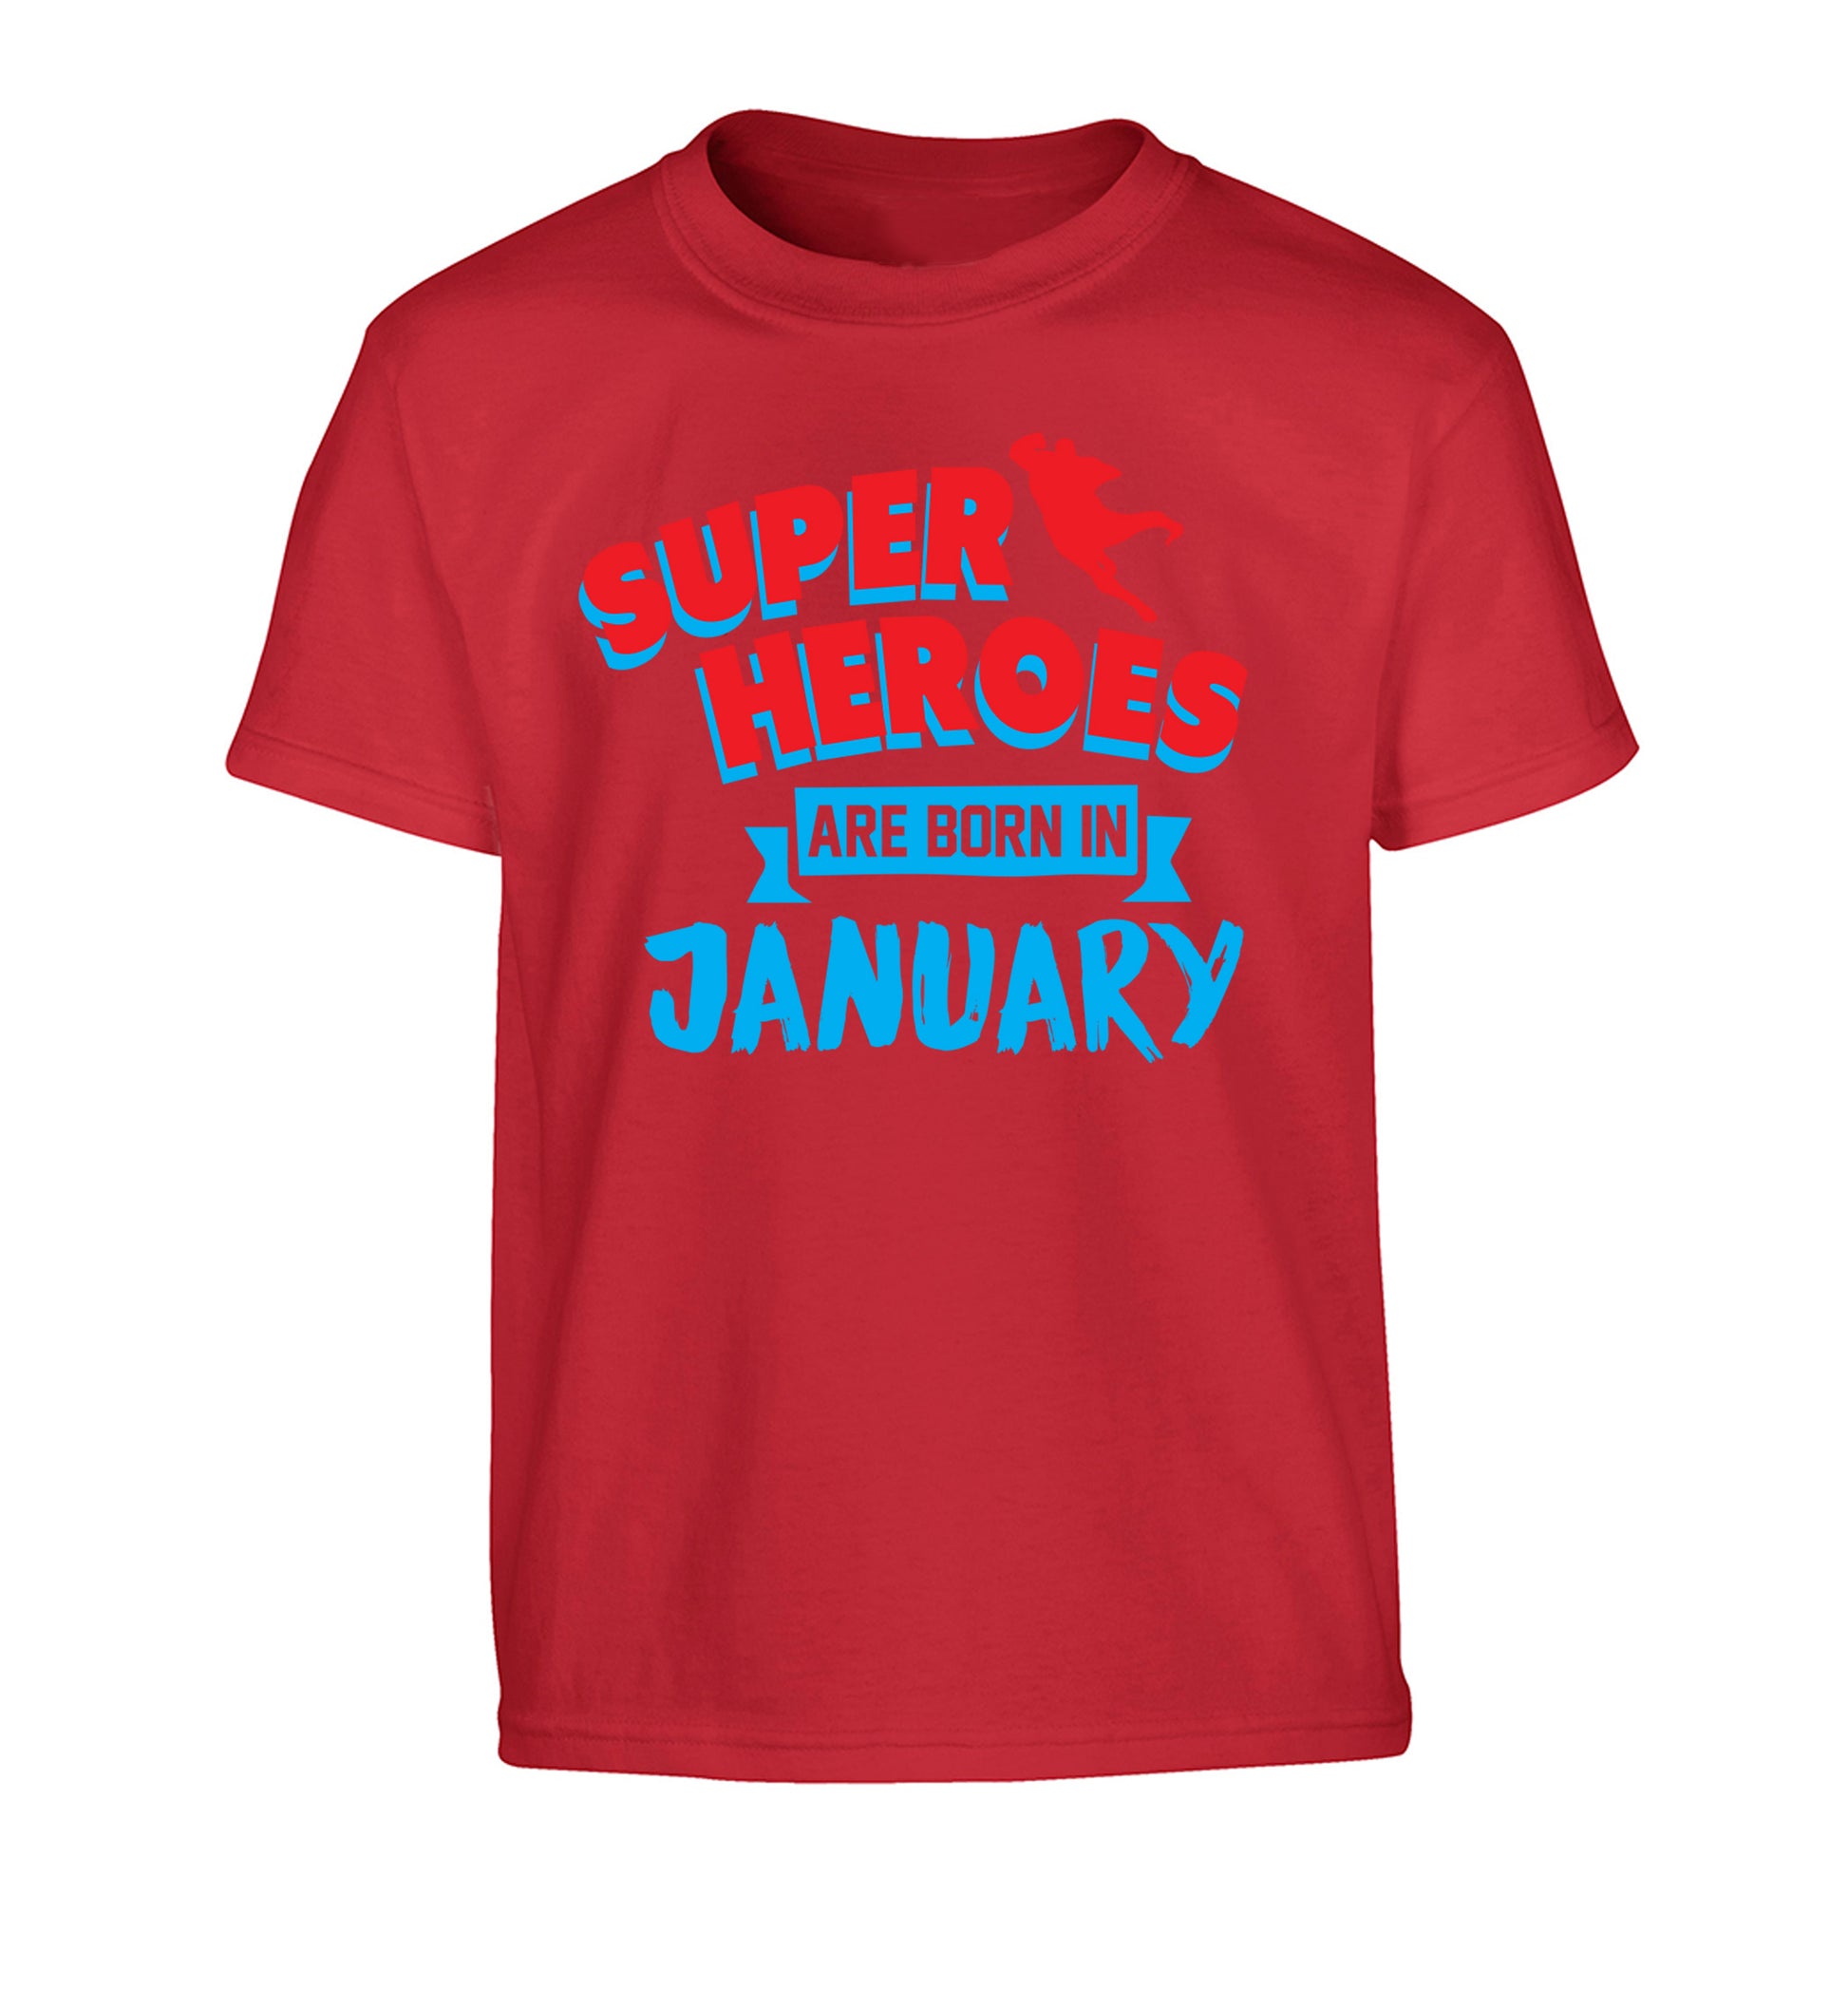 Superheros are born in January Children's red Tshirt 12-13 Years